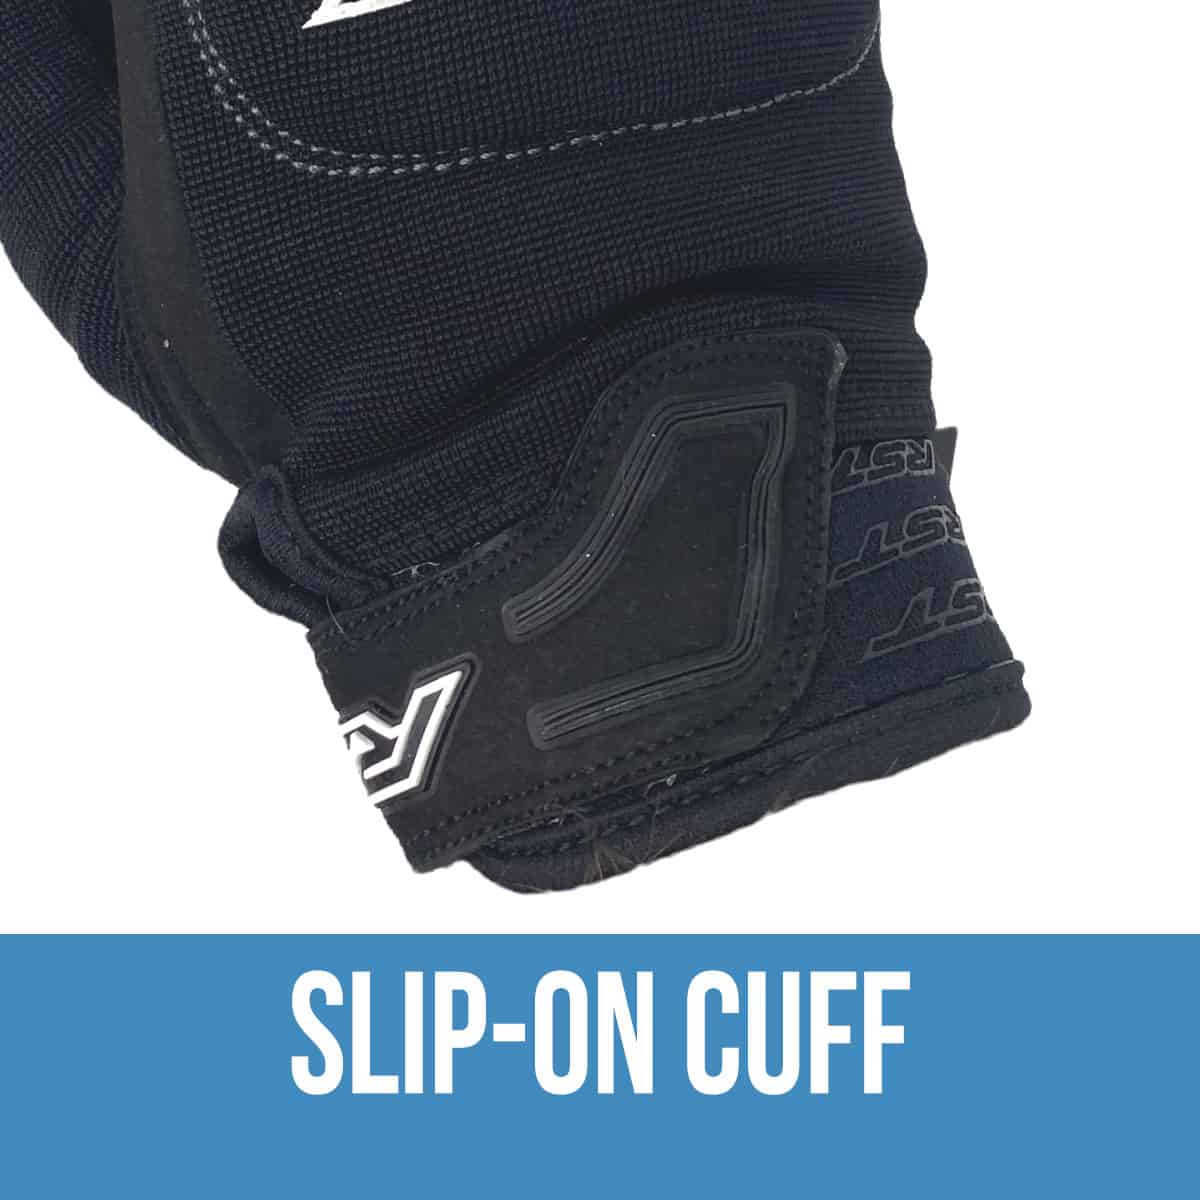 RST Rider 2100 CE-certified Gloves: Light-weight summer gloves for urban rides & touring Short cuff